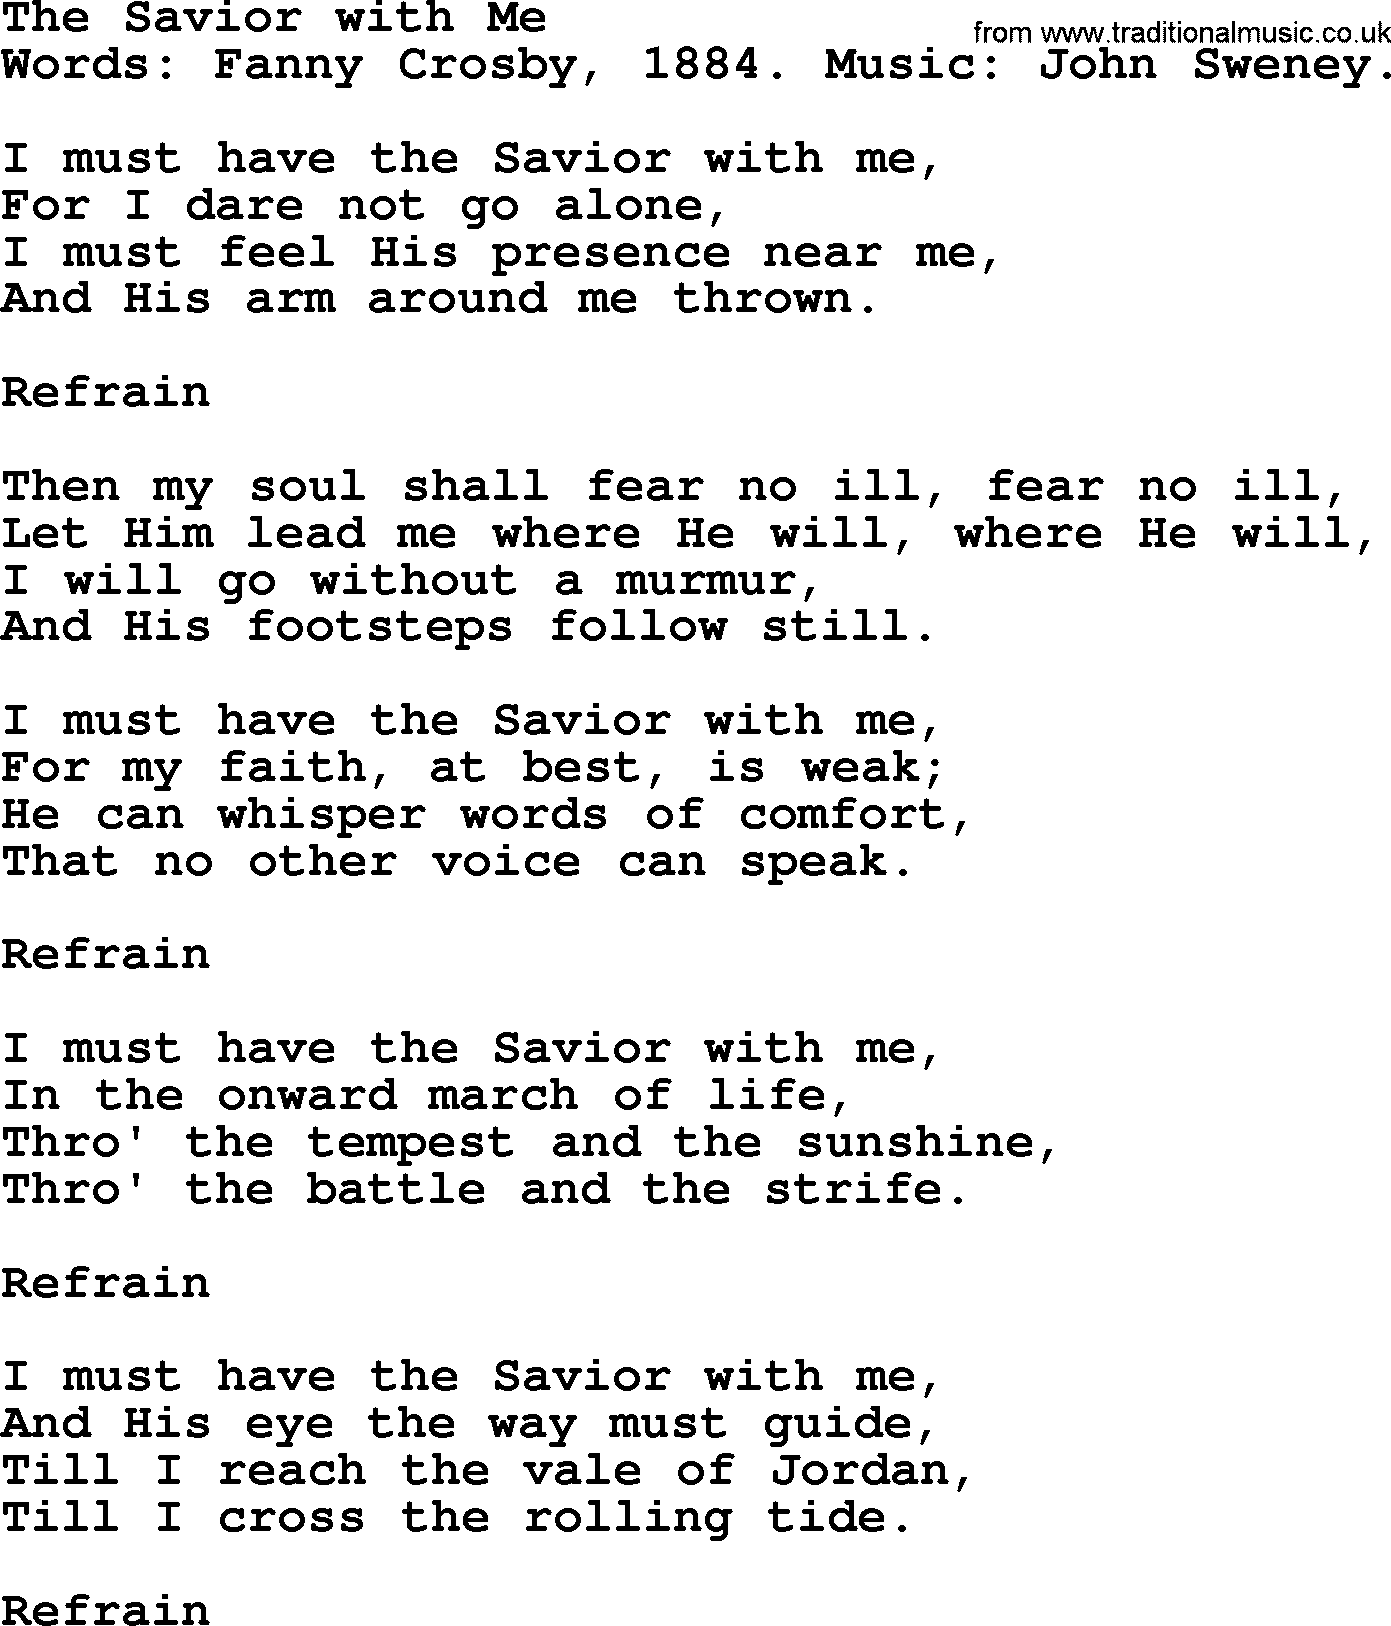 Fanny Crosby song: The Savior With Me, lyrics